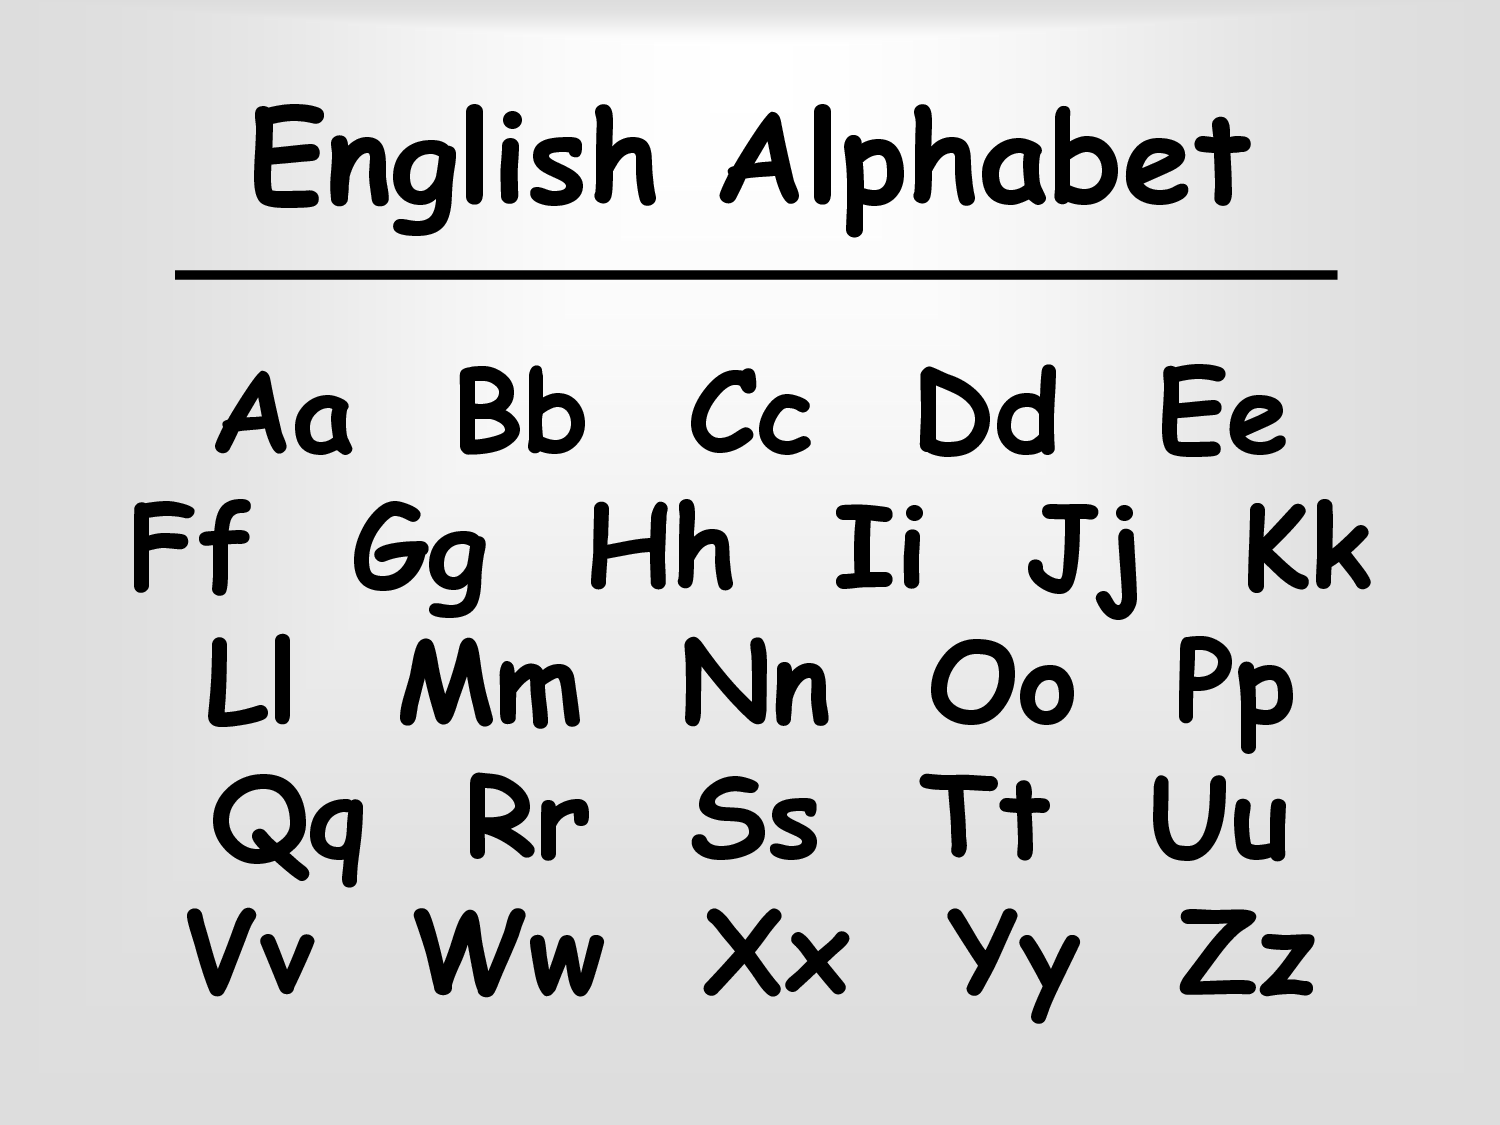 online-english-alphabet-oppidan-library